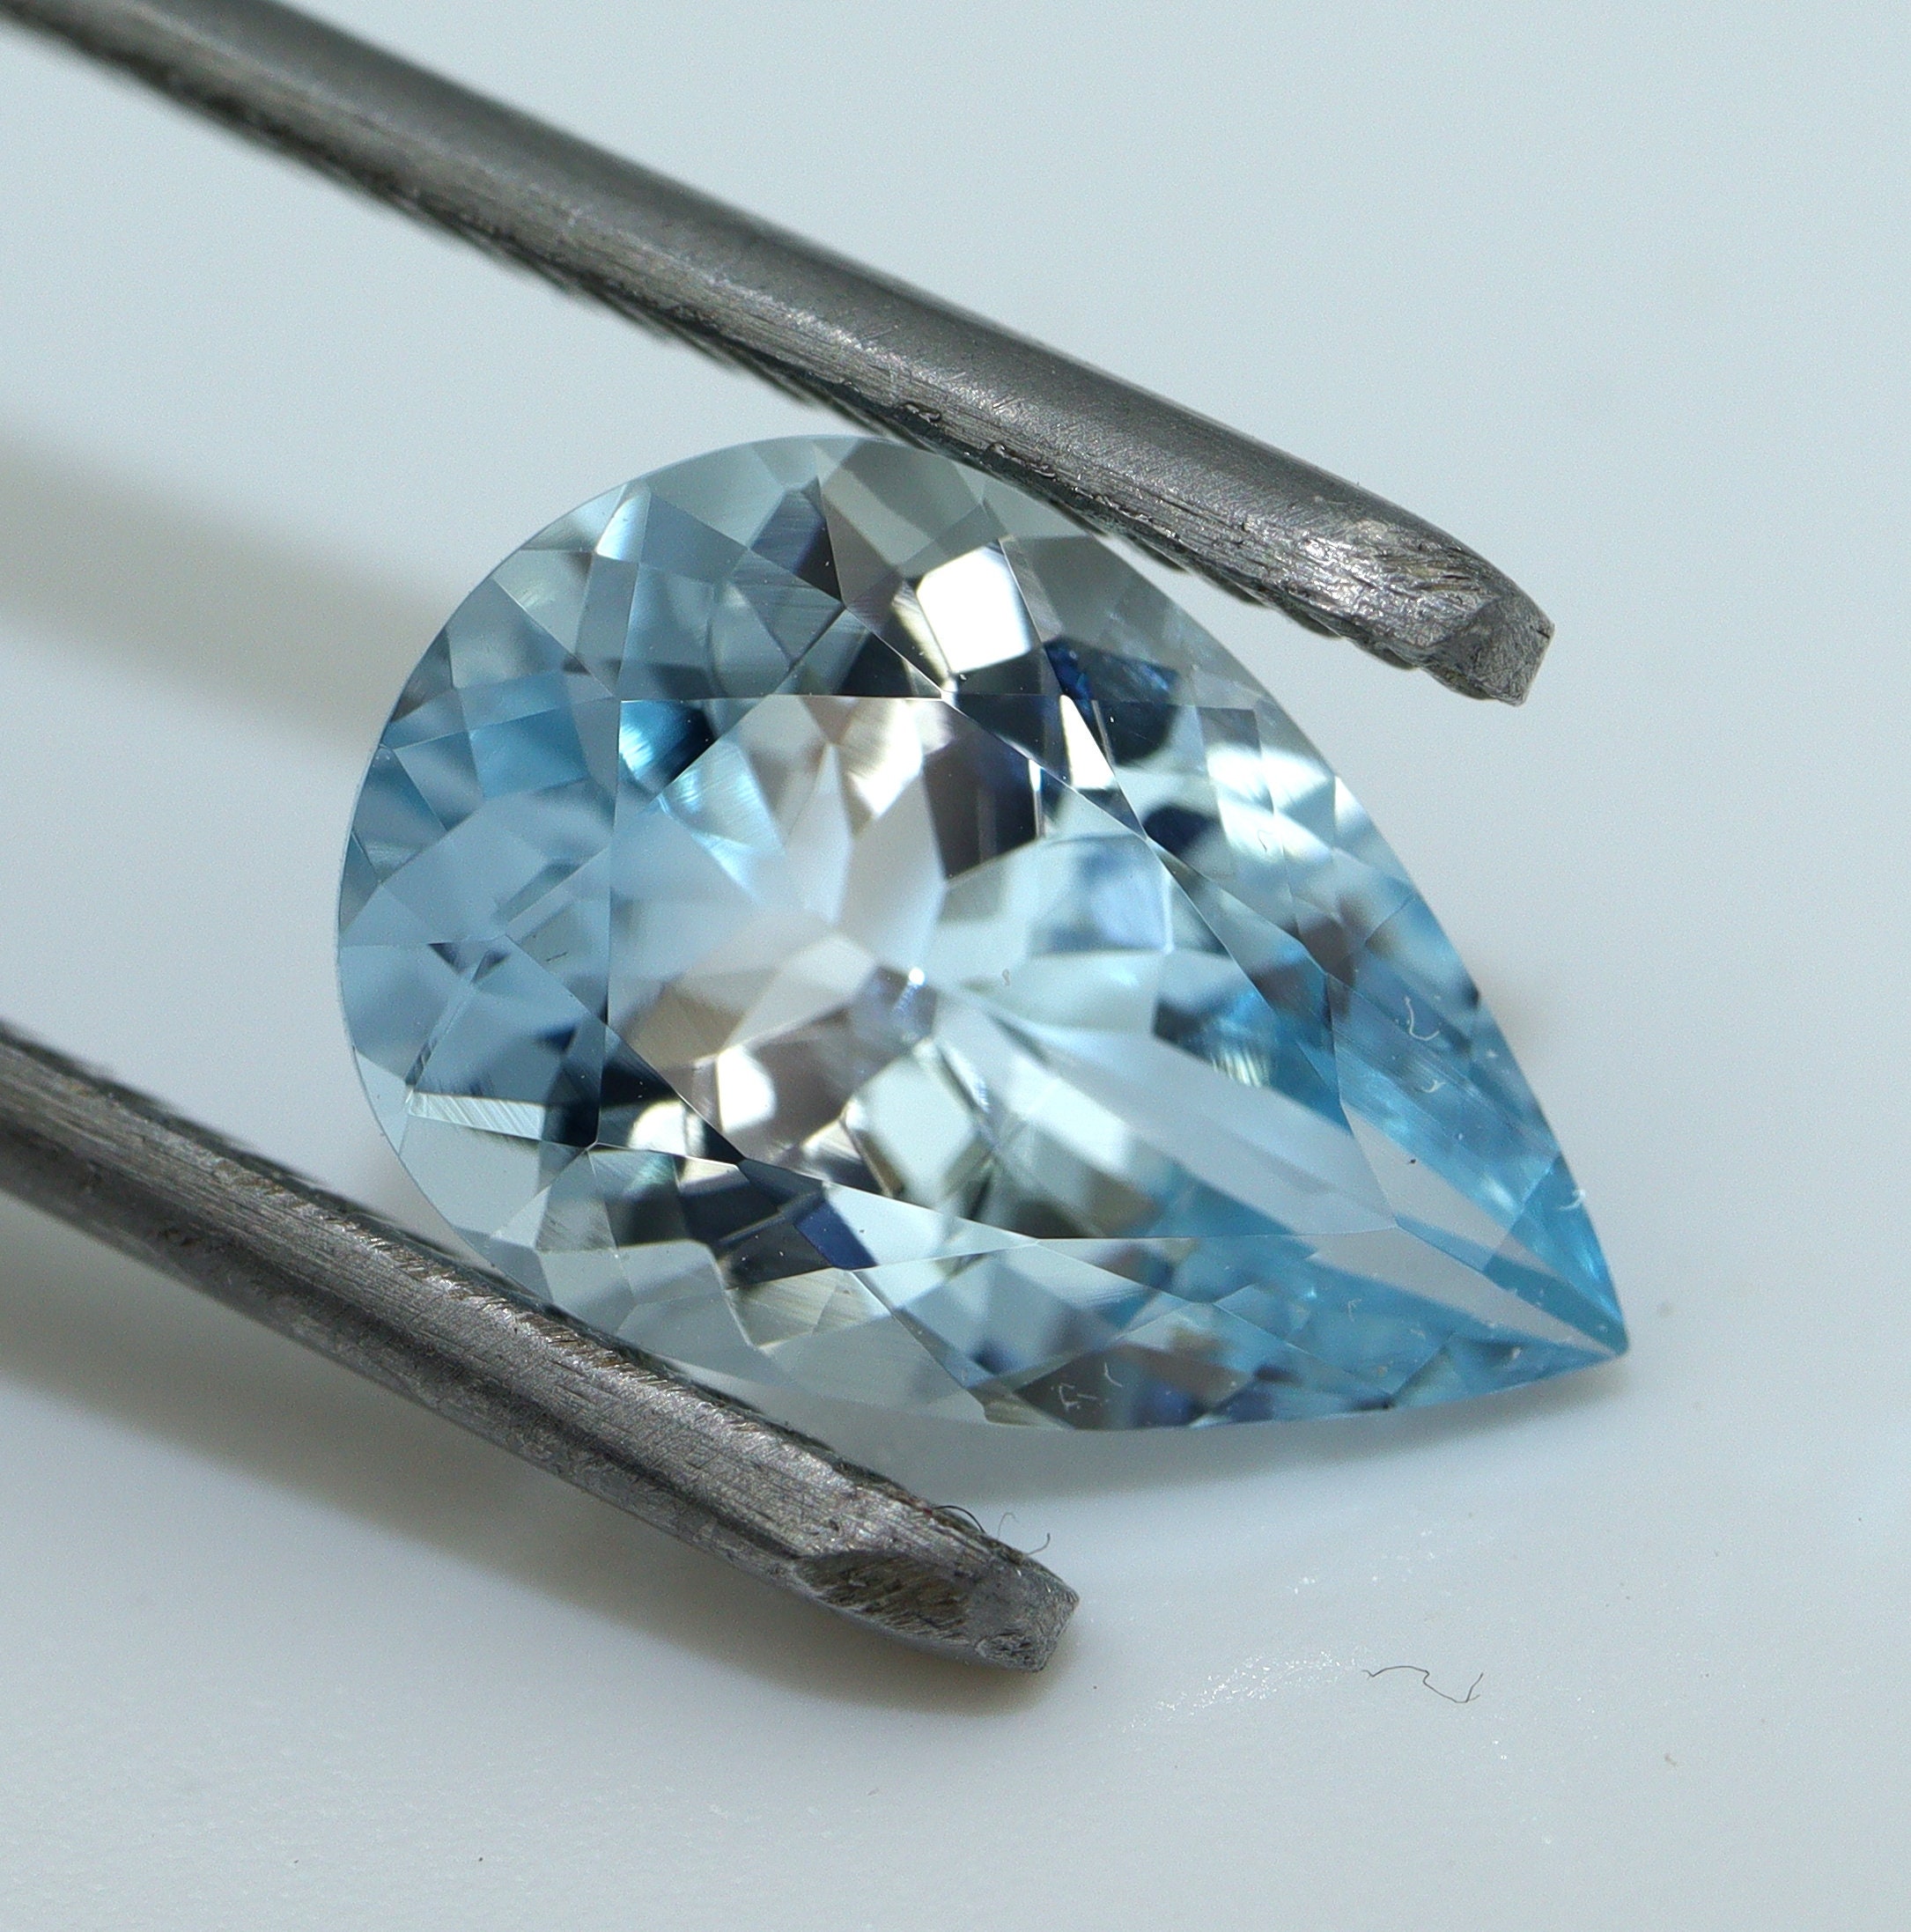 Super Shiny Stone Faceted Aquamarine Loose Gemstone 2.7 Ct AAA Natural AQUAMARINE Pear Cut Unheated & Untreated Aquamarine For Jewelry